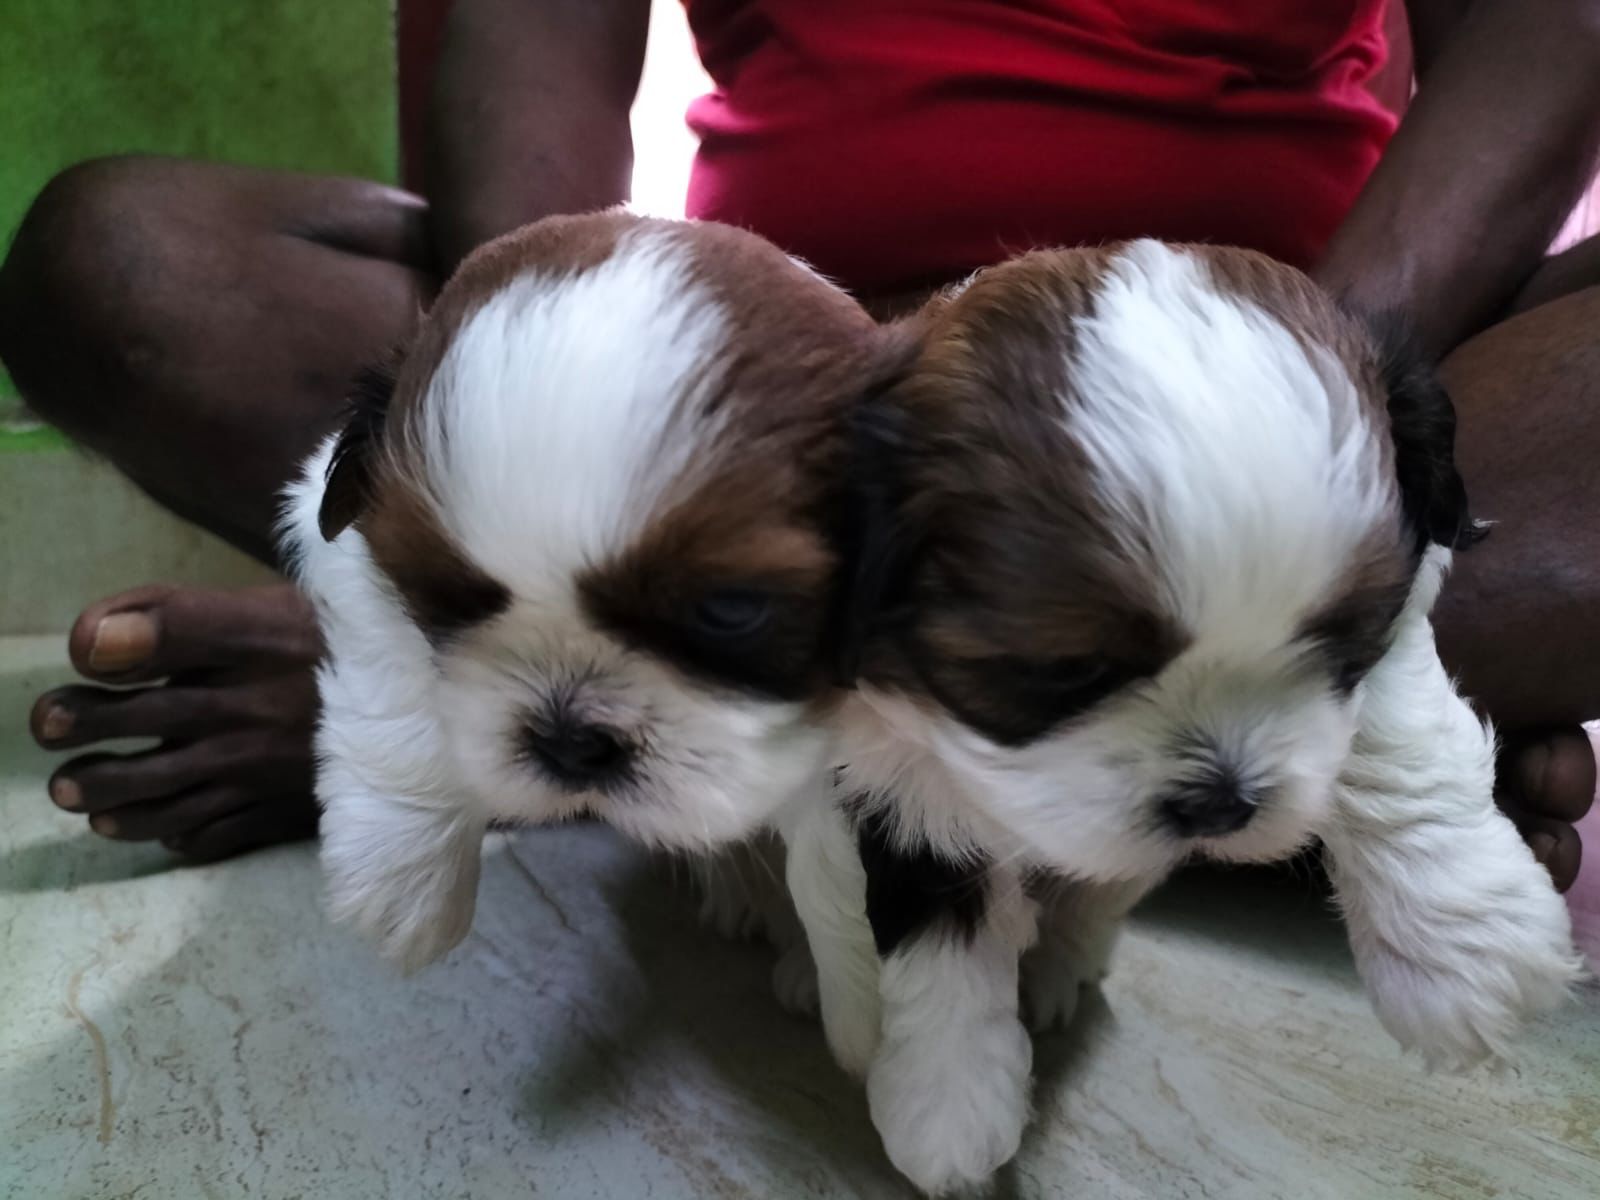 Shitzu puppies from Chennai. Breeder: Mv home breed pets